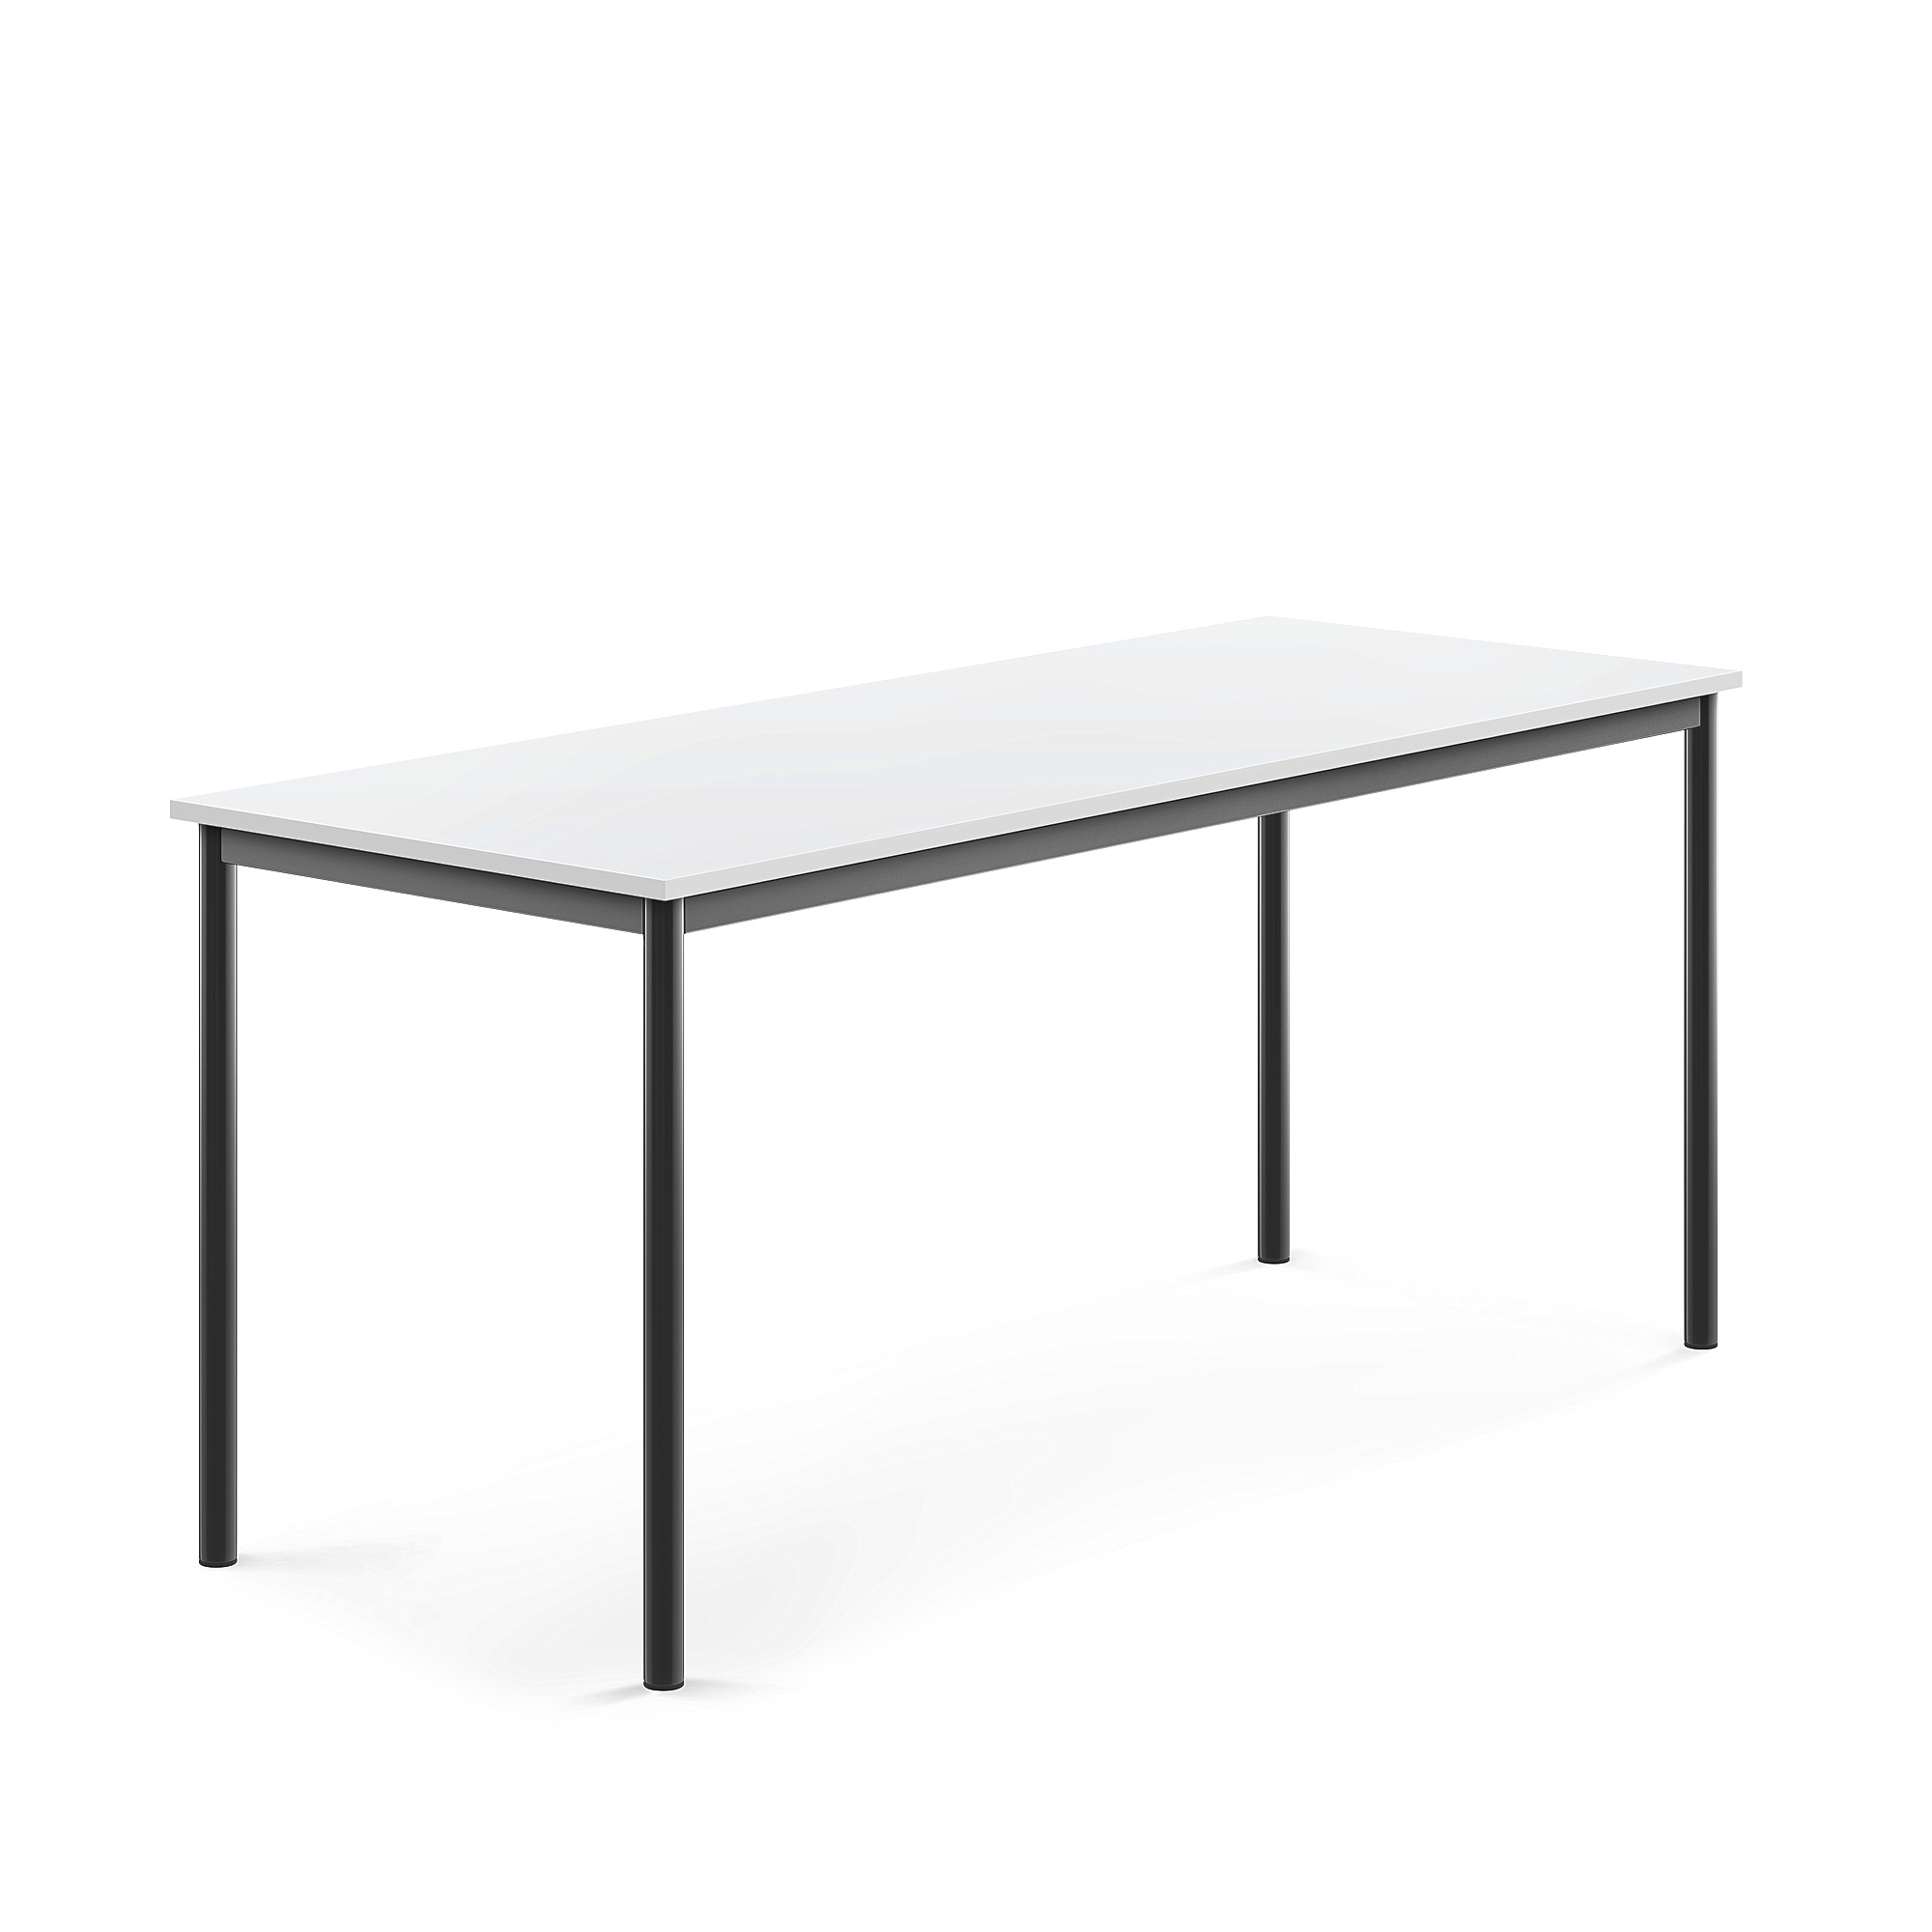 Stůl BORÅS, 1800x700x760 mm, antracitově šedé nohy, HPL deska, bílá